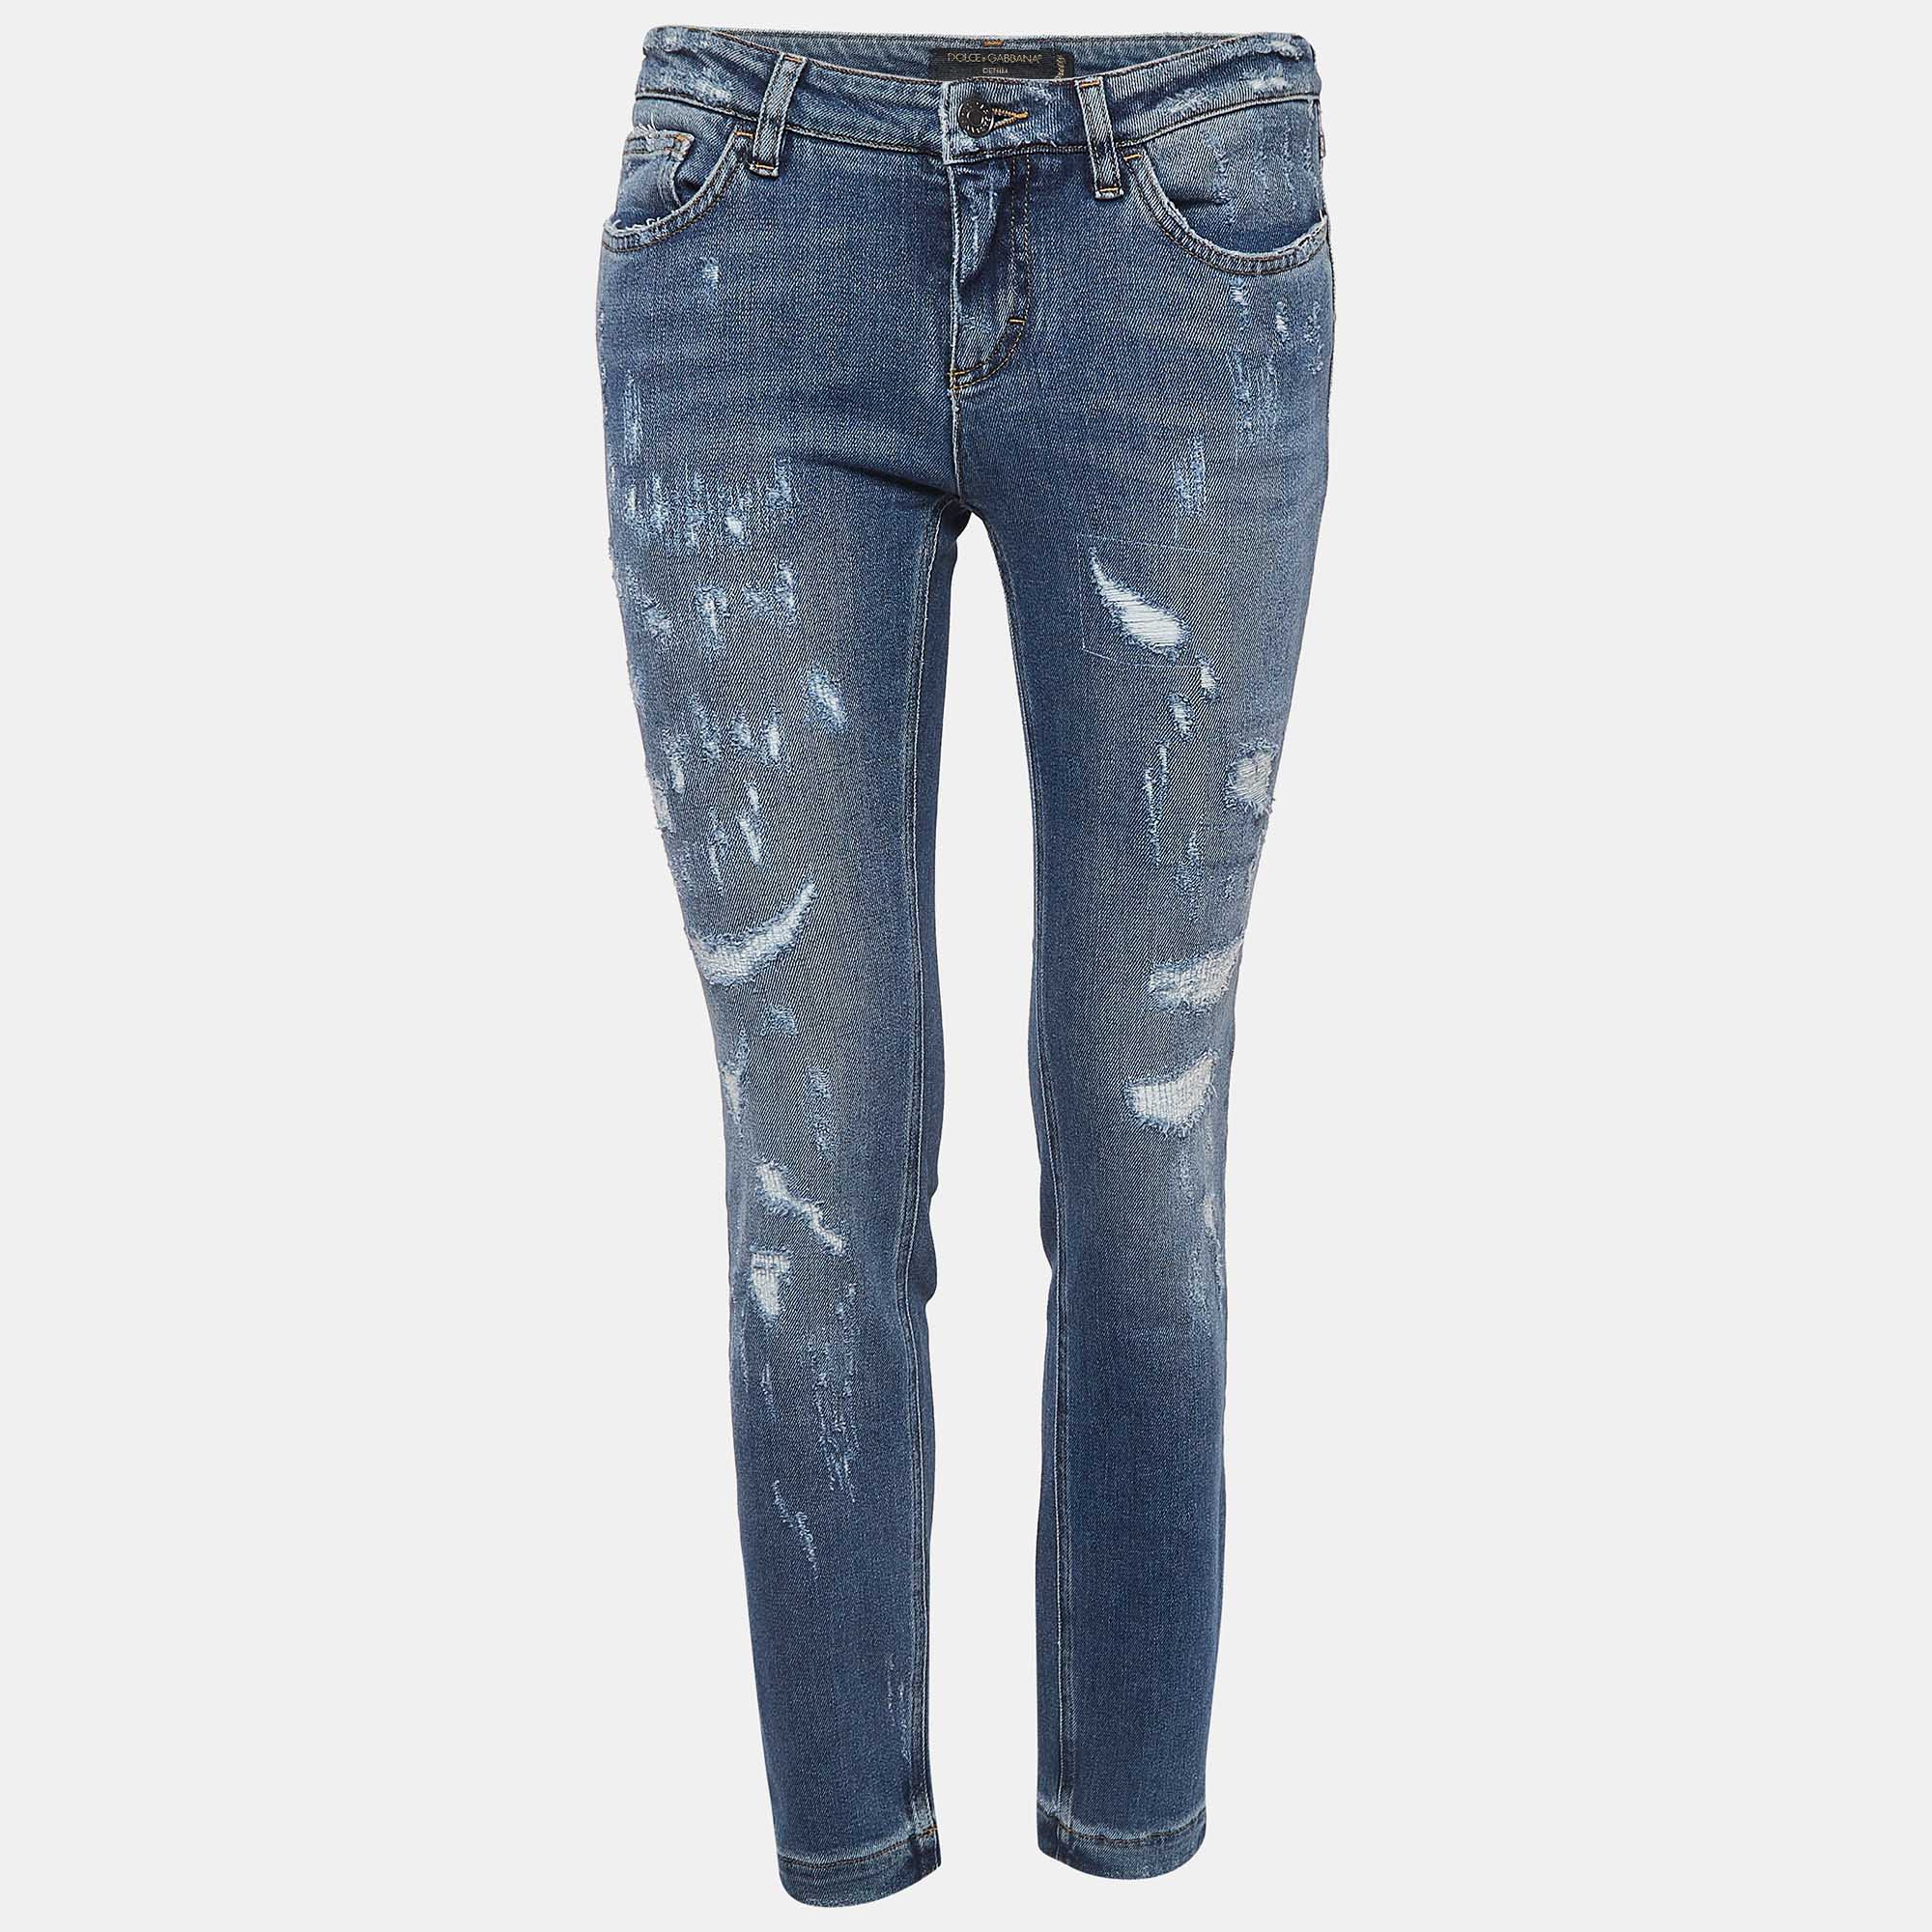 Dolce & gabbana blue distressed denim pretty jeans s waist 28